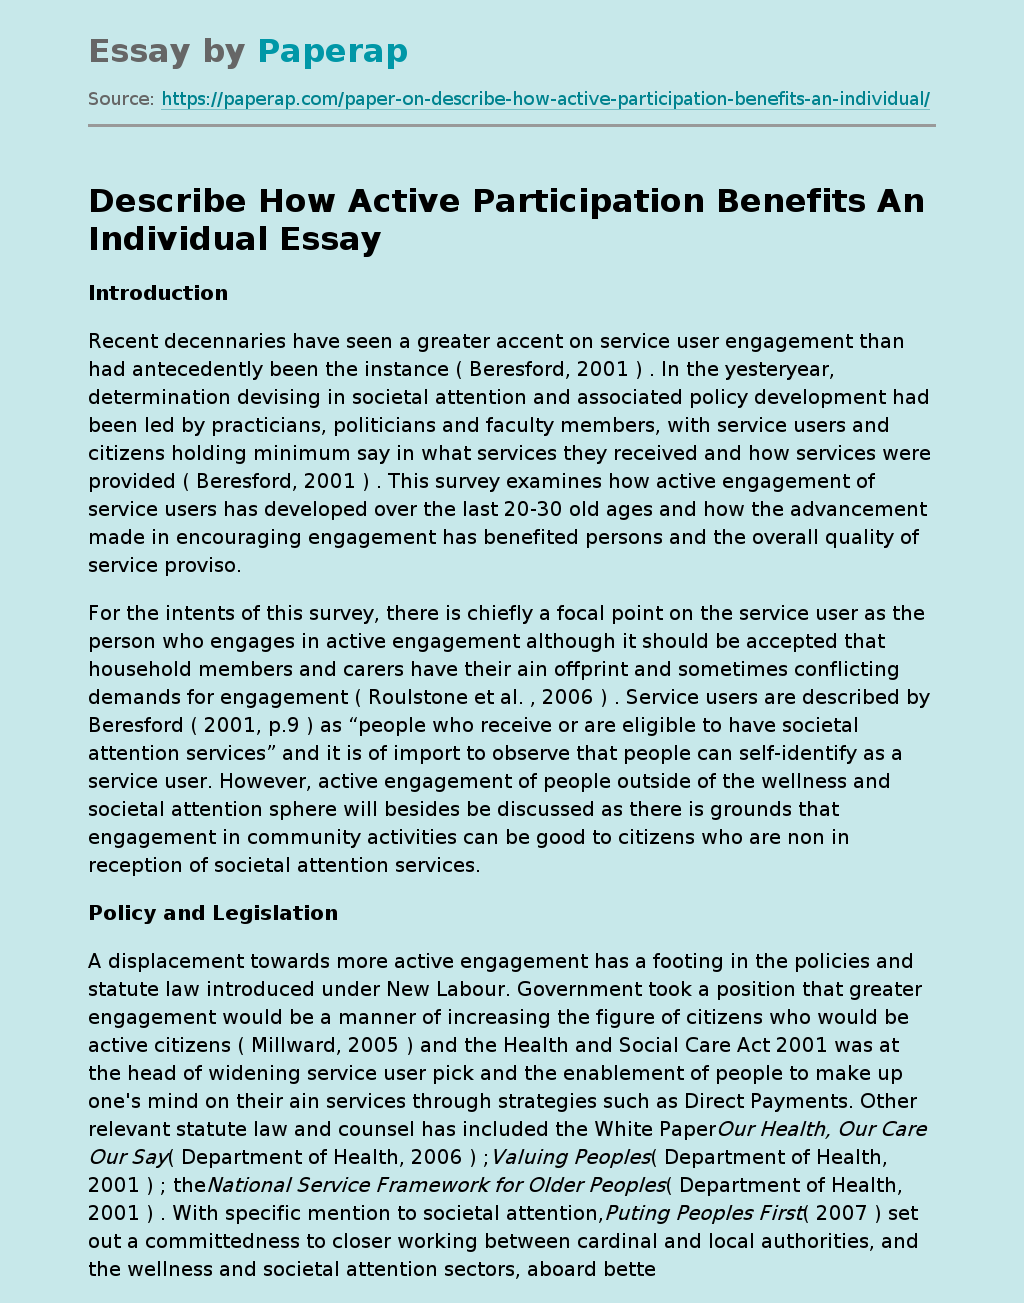 Describe How Active Participation Benefits An Individual